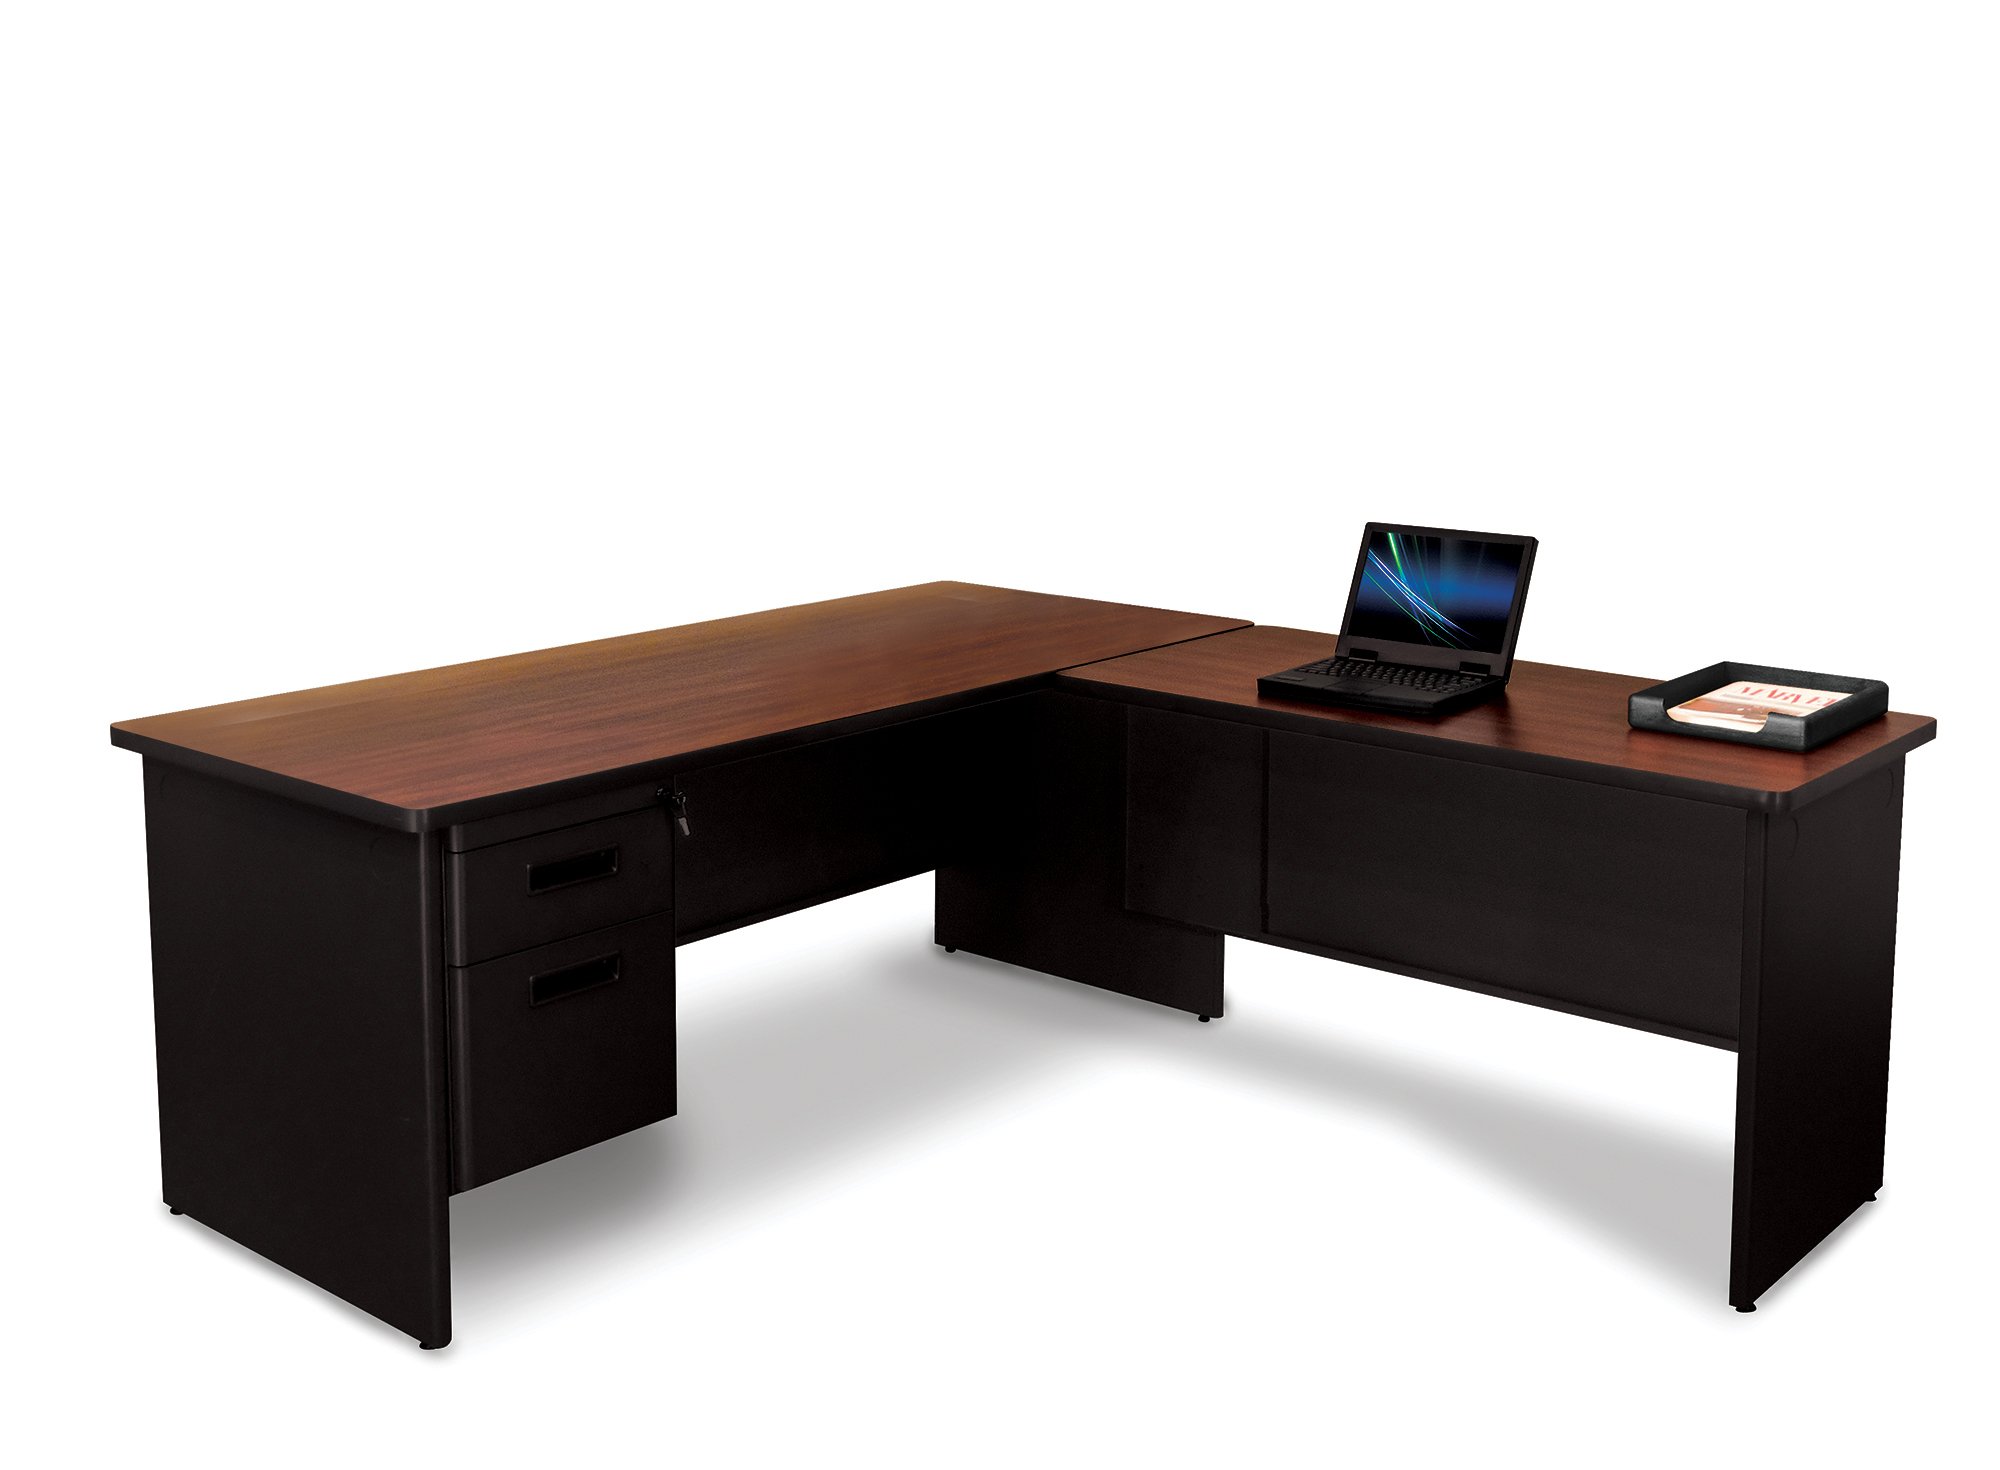 Prnt1bkma 72 W X 78 D Desk With Return, Black & Mahogany